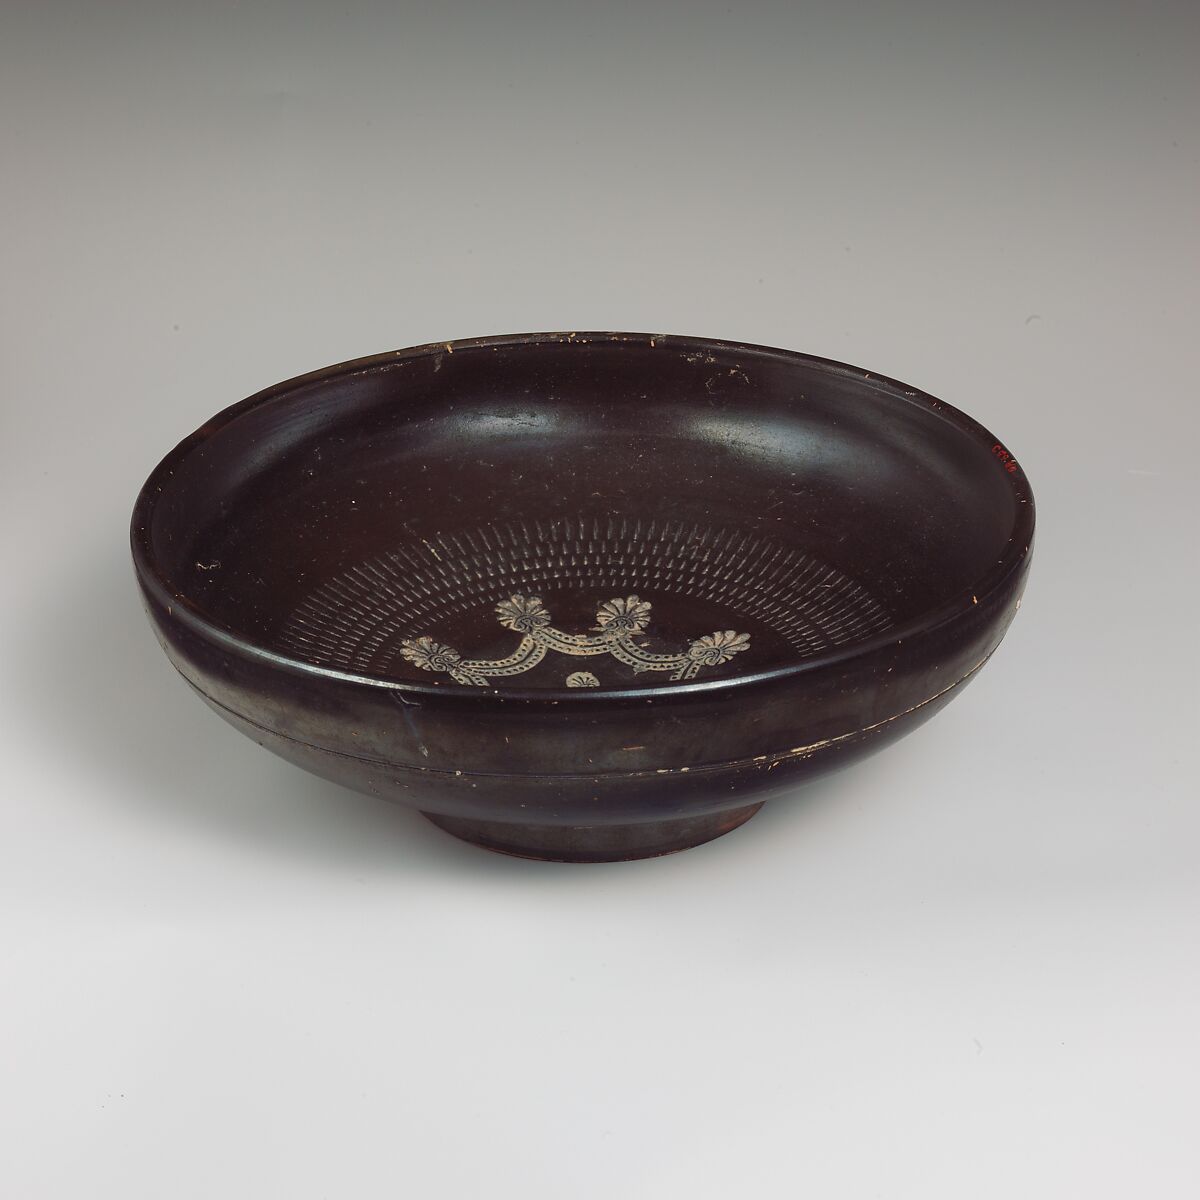 Terracotta bowl, Terracotta, Greek, South Italian, Campanian 